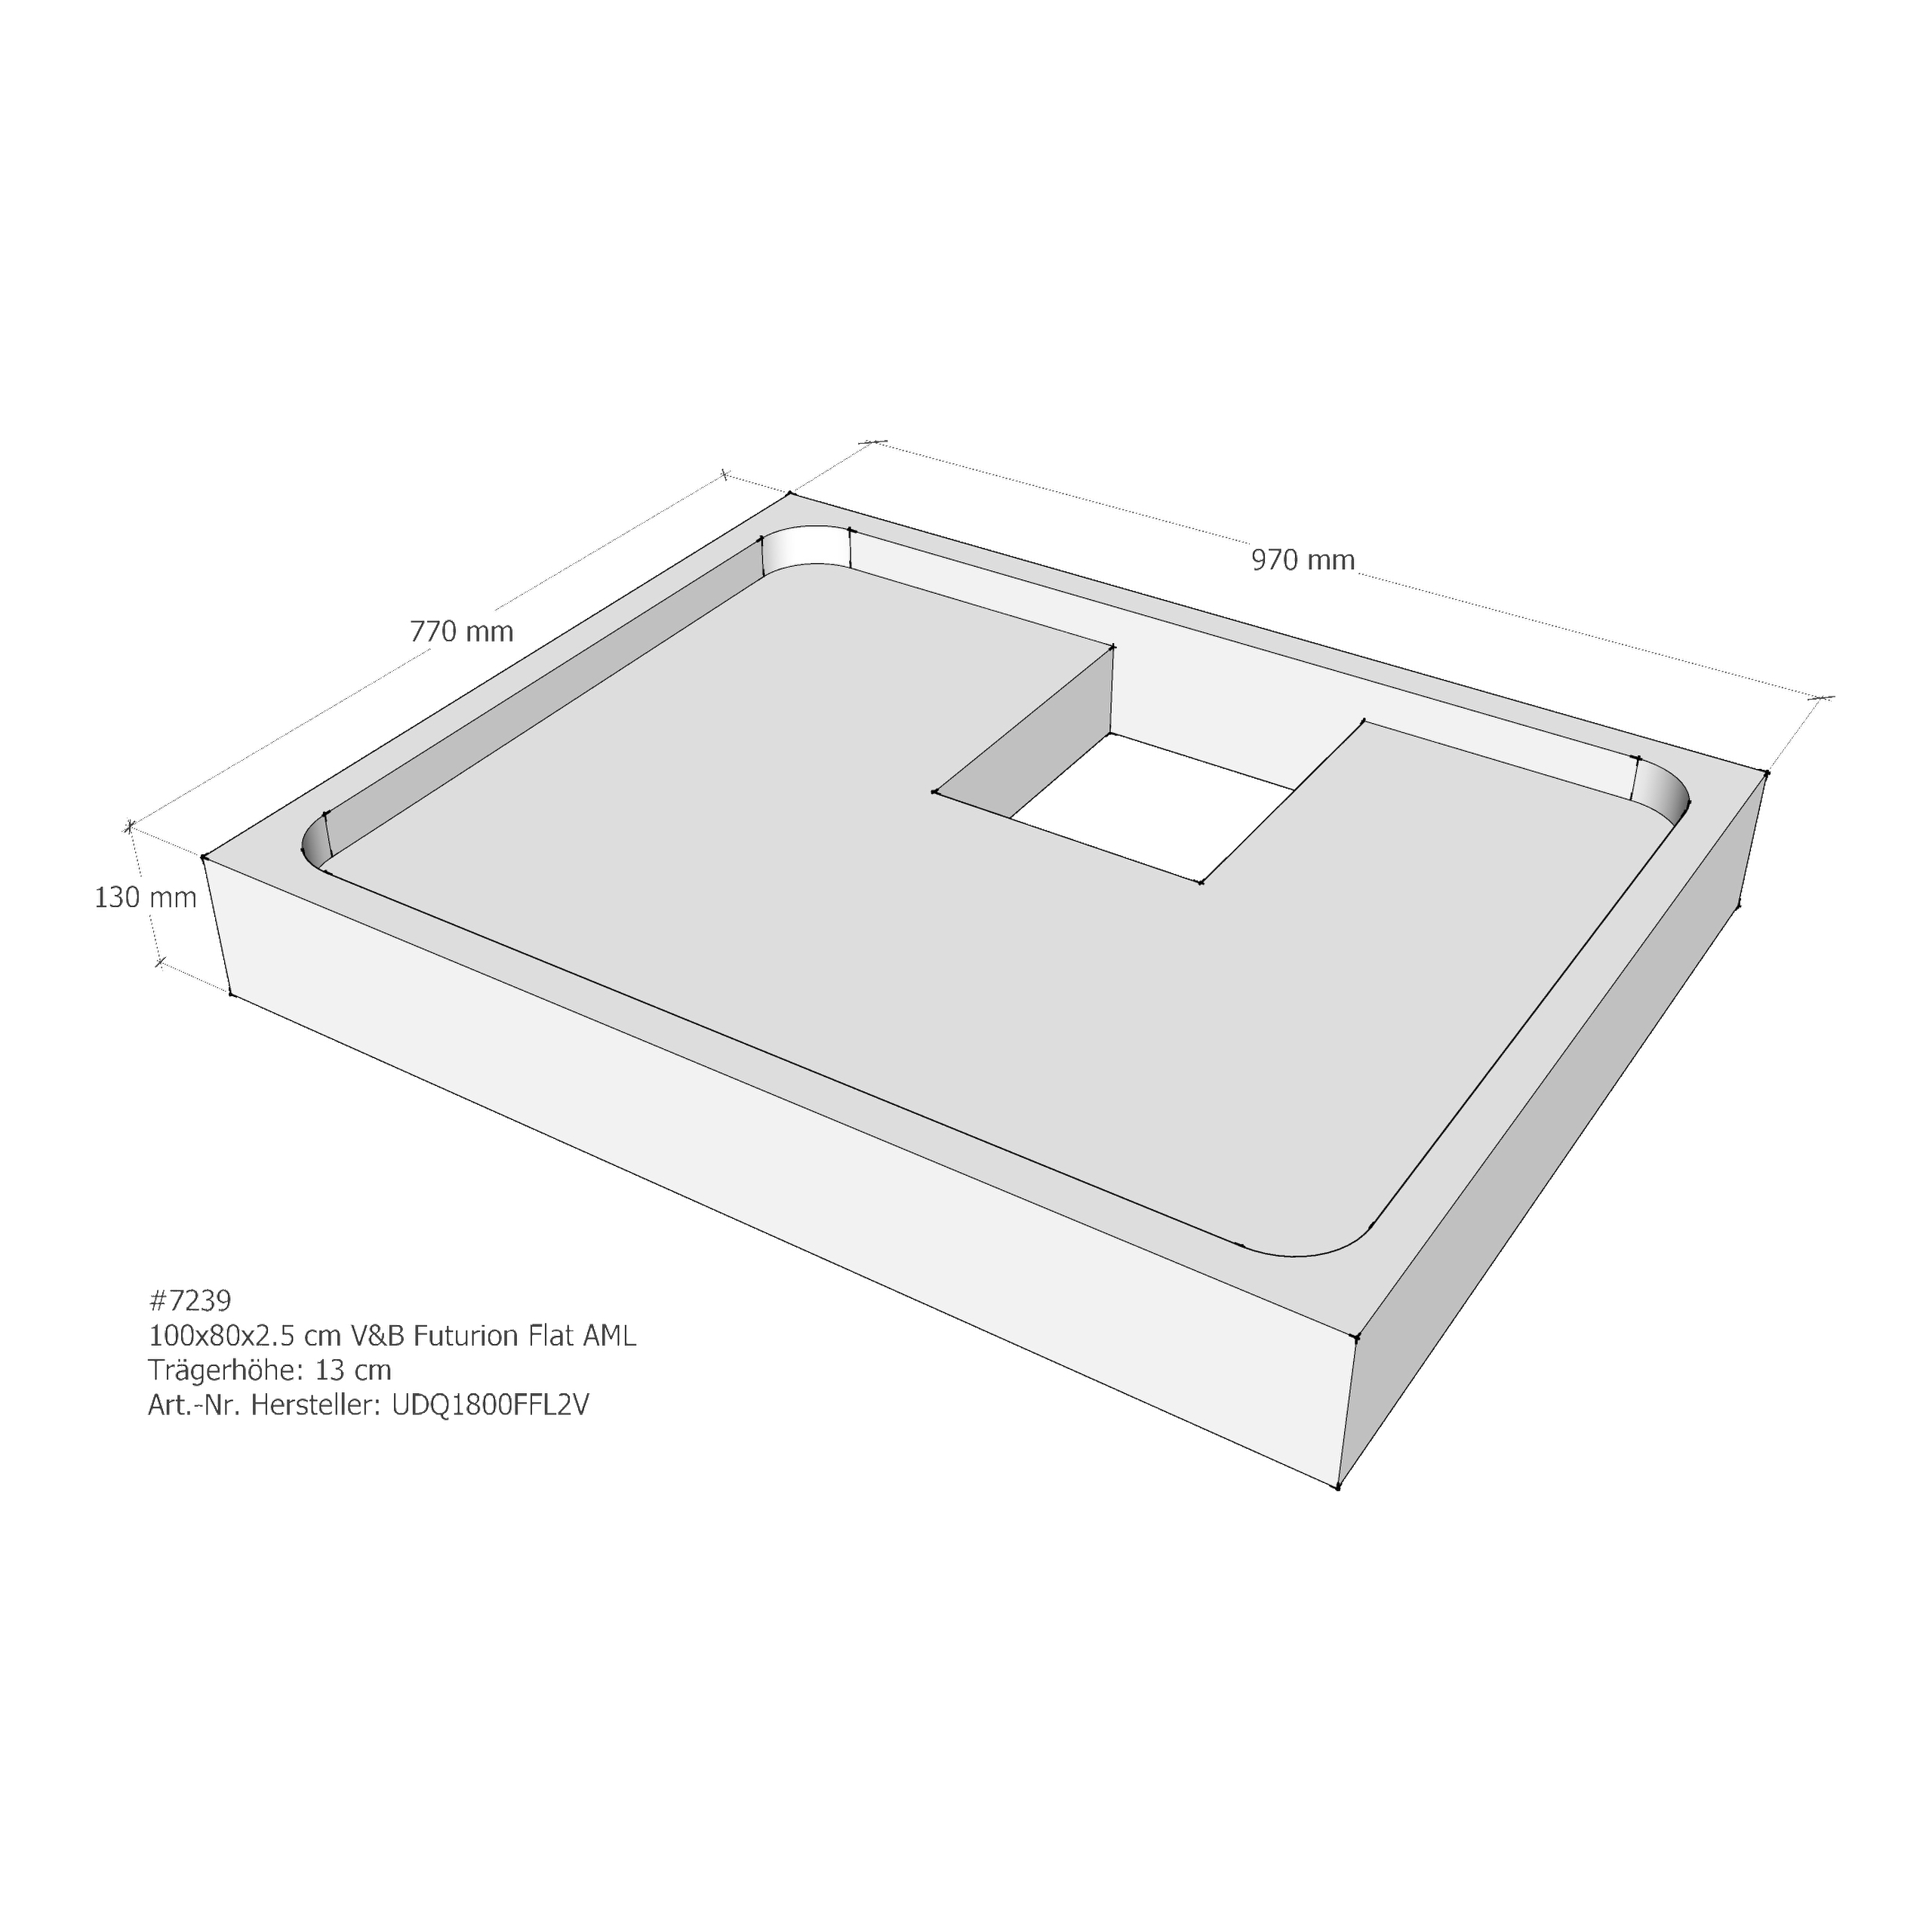 Duschwannenträger für Villeroy & Boch Futurion Flat 100 × 80 × 2,5 cm